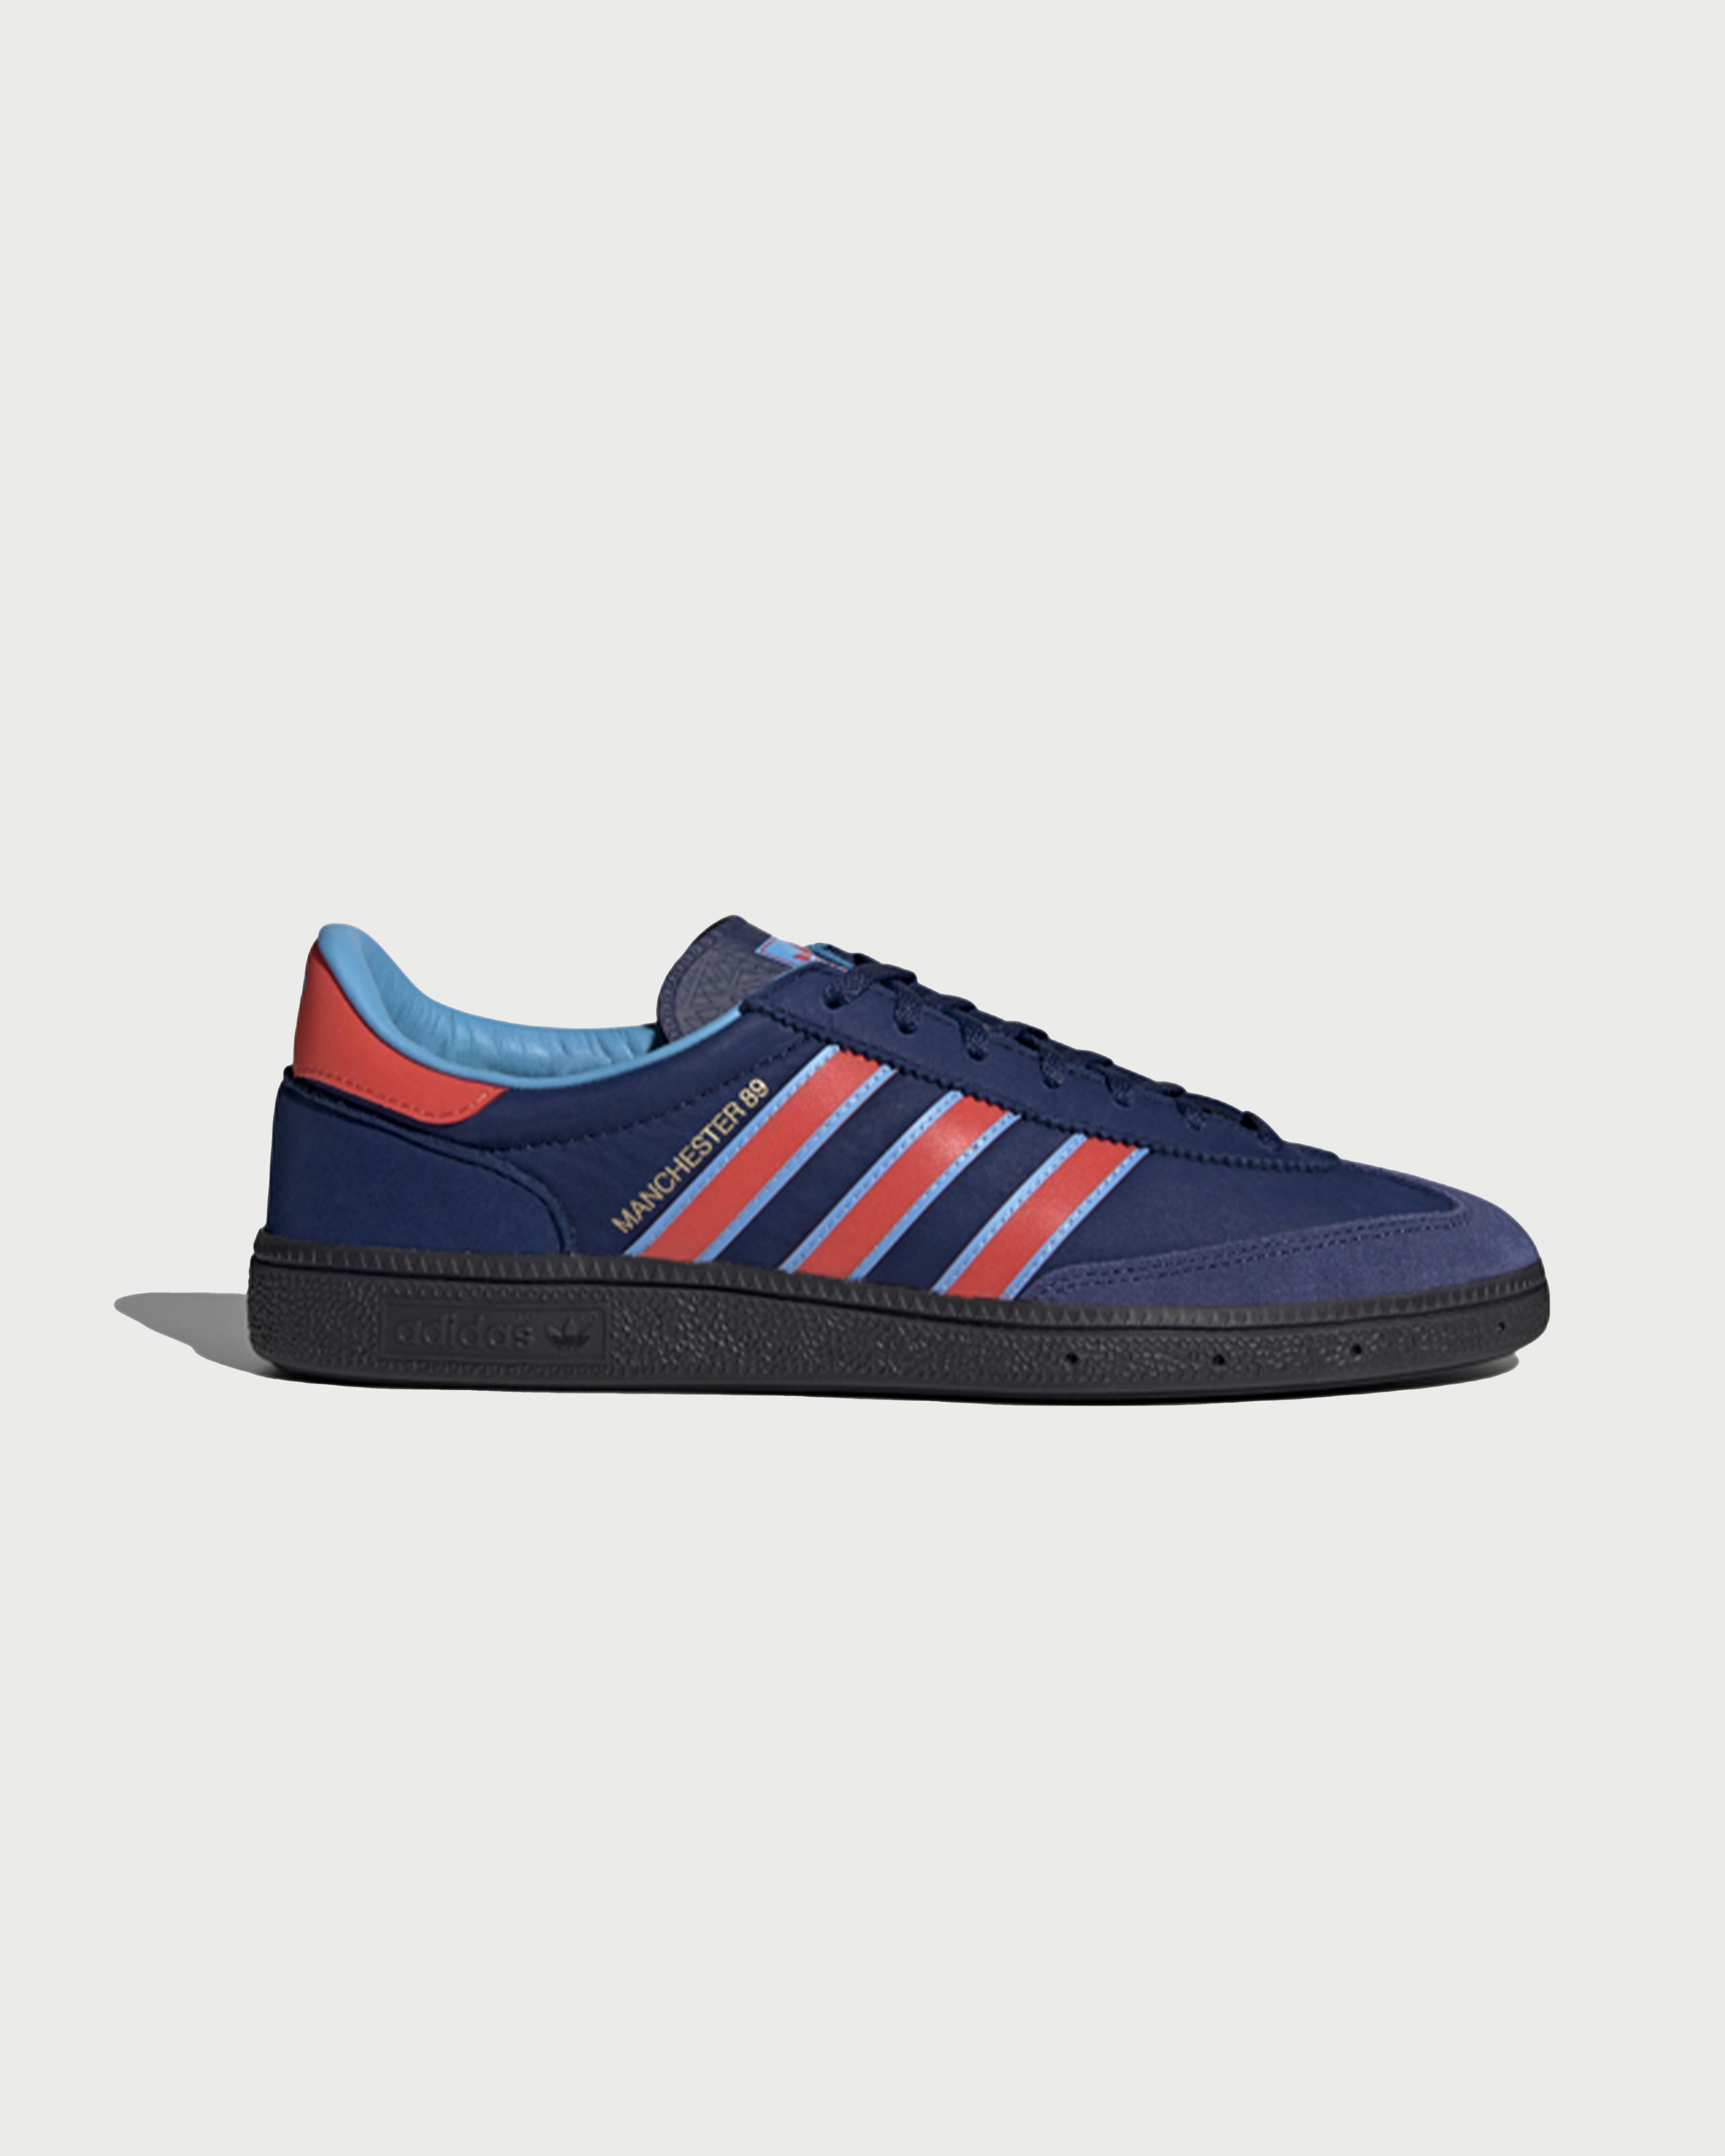 Adidas - Spezial Manchester 89 Trainer Navy - Footwear - Blue - Image 1